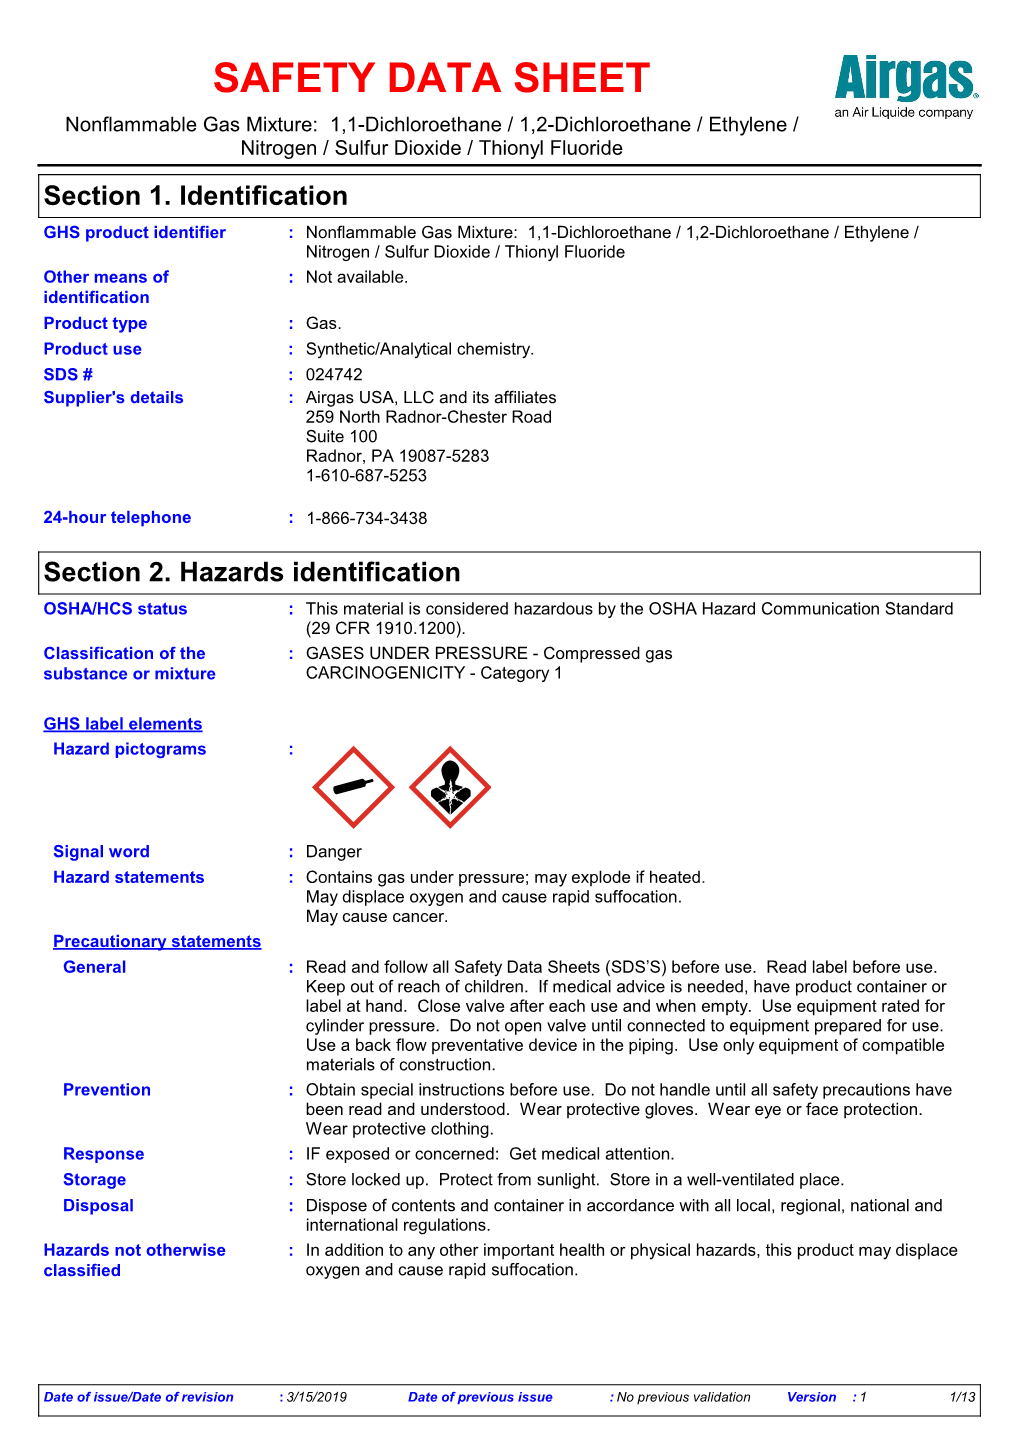 SAFETY DATA SHEET Nonflammable Gas Mixture: 1,1-Dichloroethane / 1,2-Dichloroethane / Ethylene / Nitrogen / Sulfur Dioxide / Thionyl Fluoride Section 1